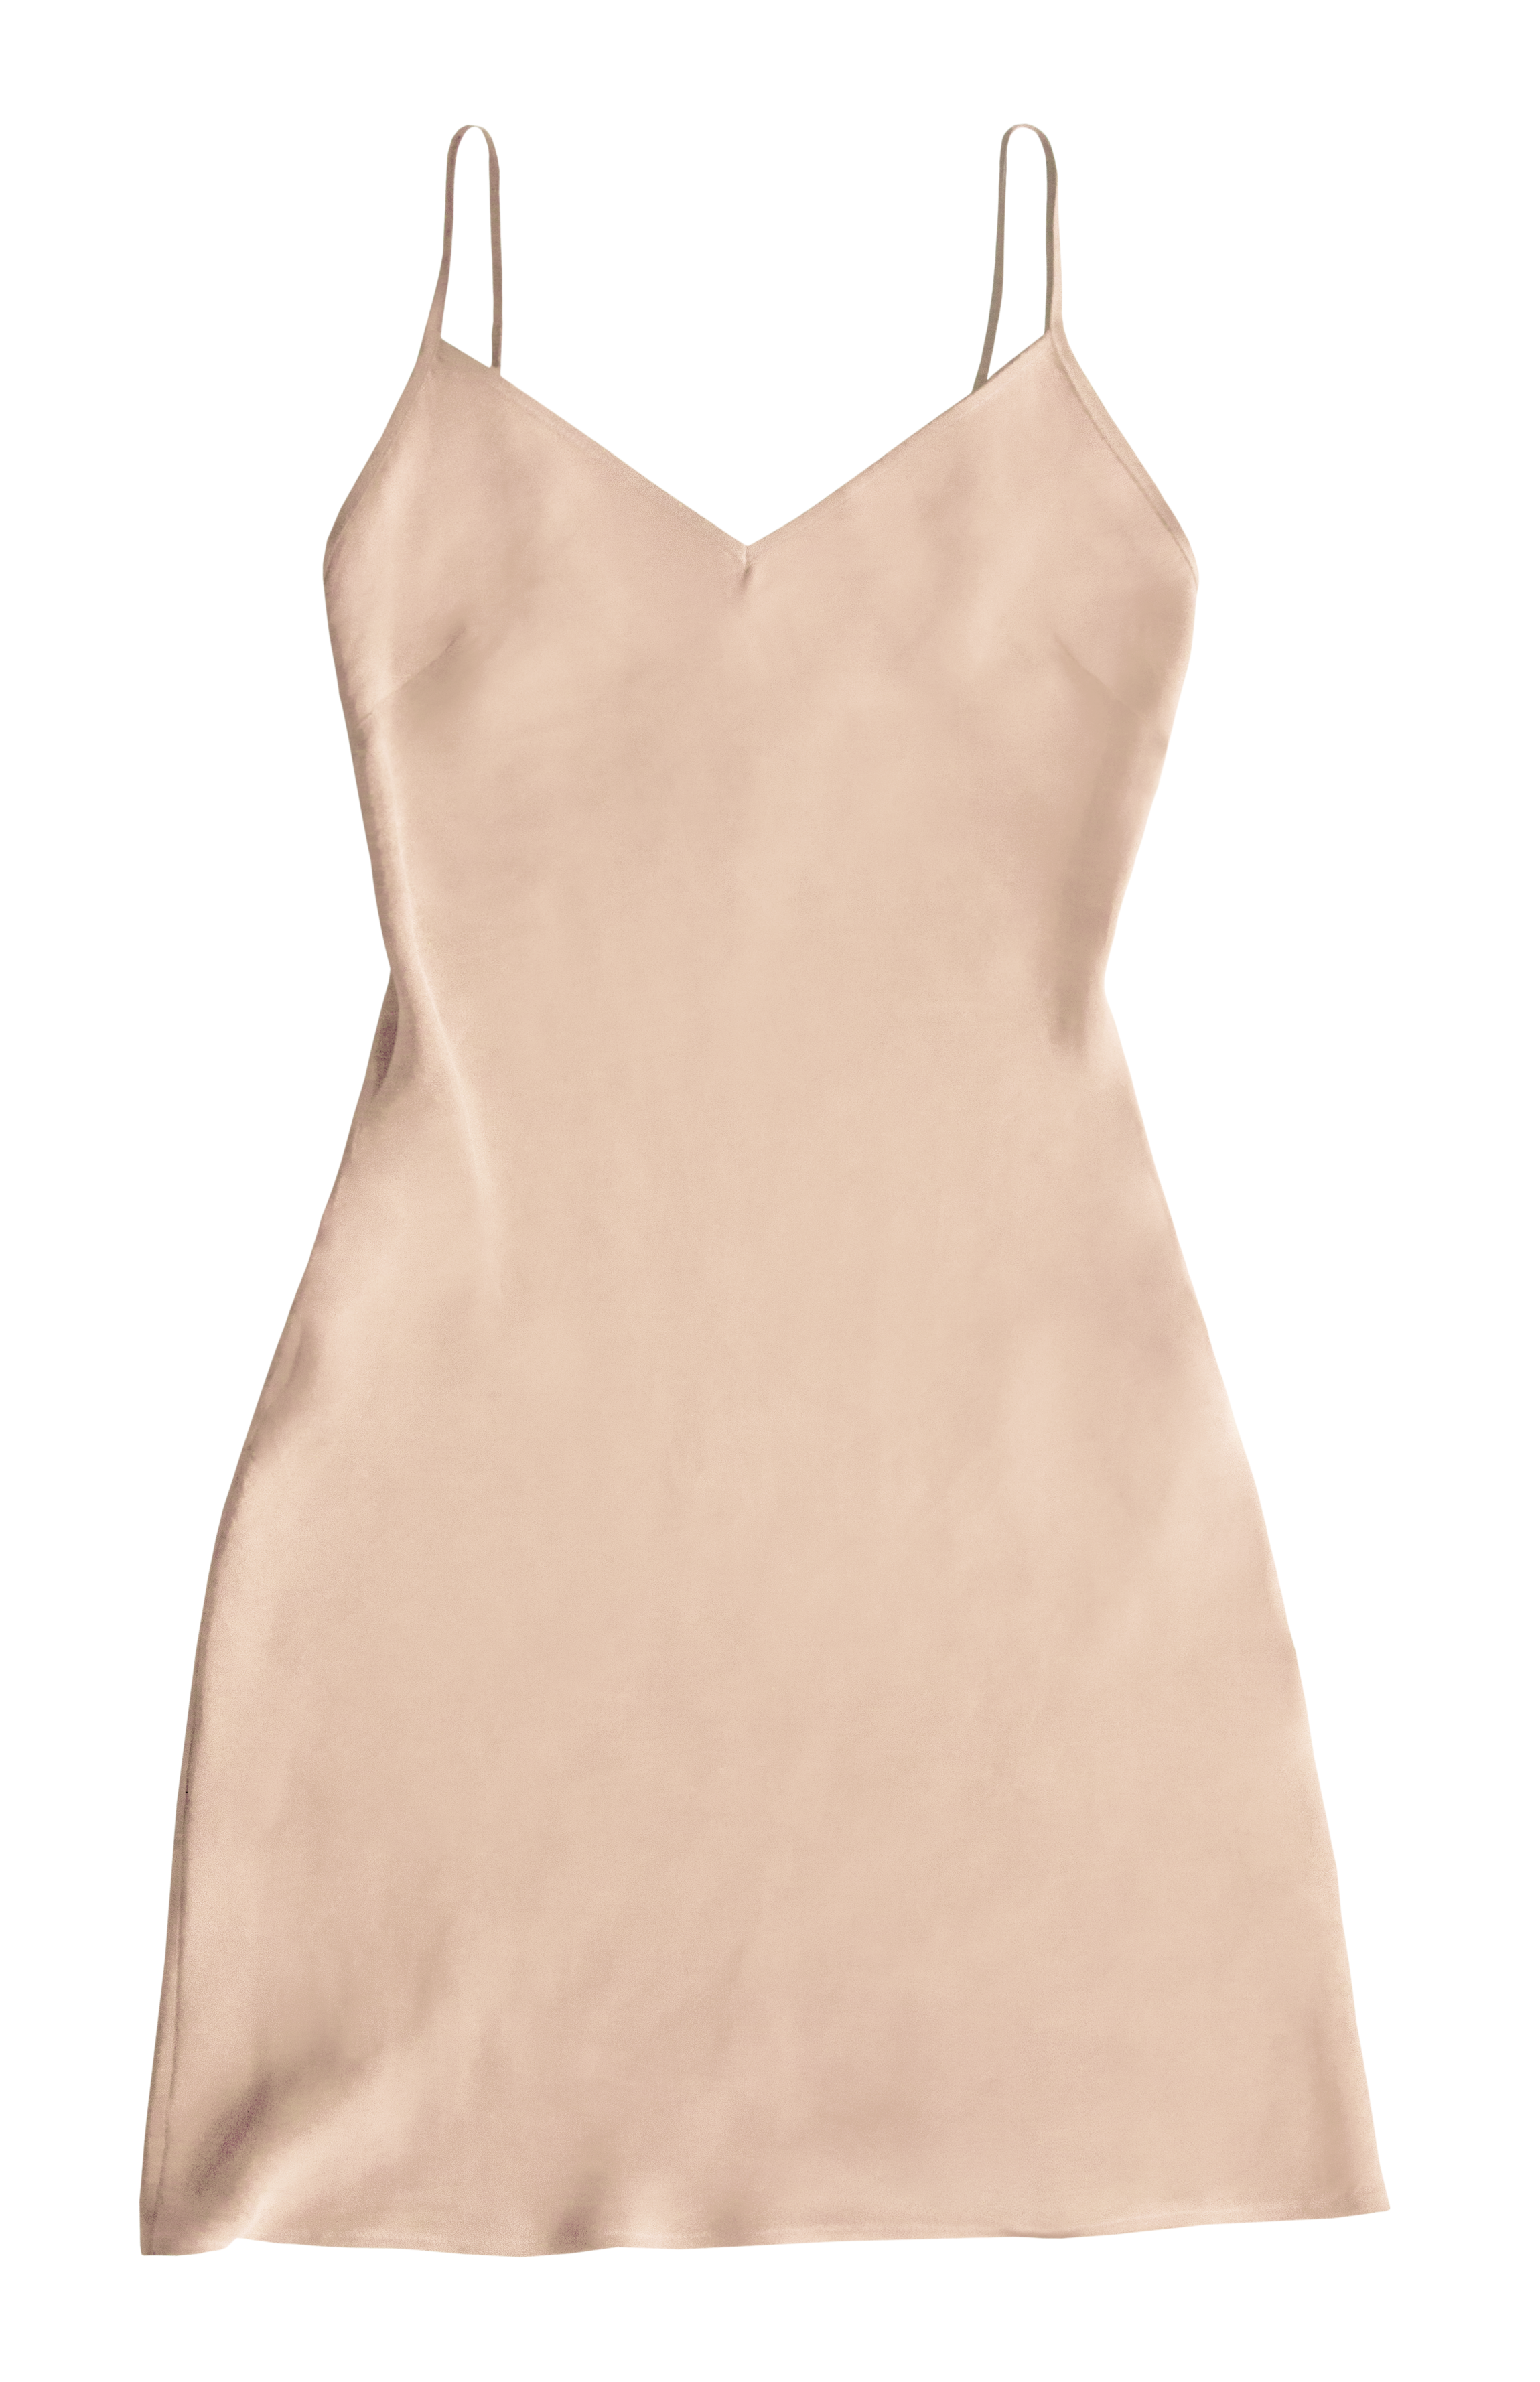 Slips lace silk cotton bias cut undergarment dress